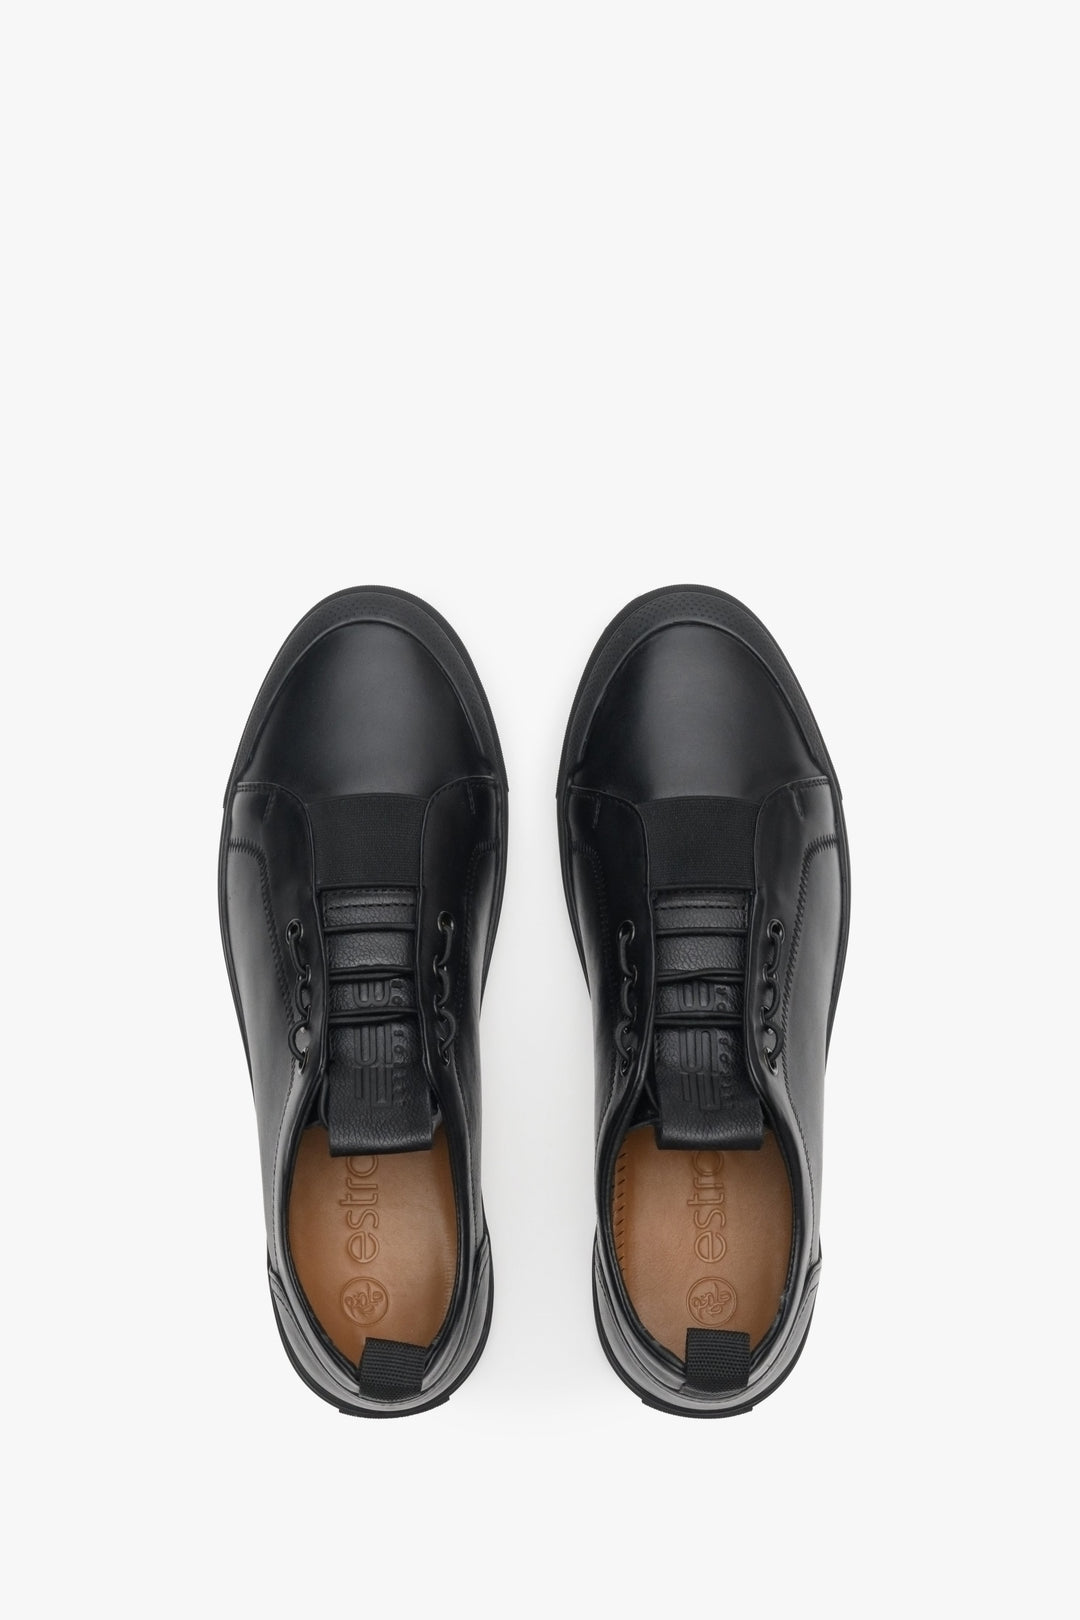 Men's black leather Estro sneakers - top view presentation of the footwear.